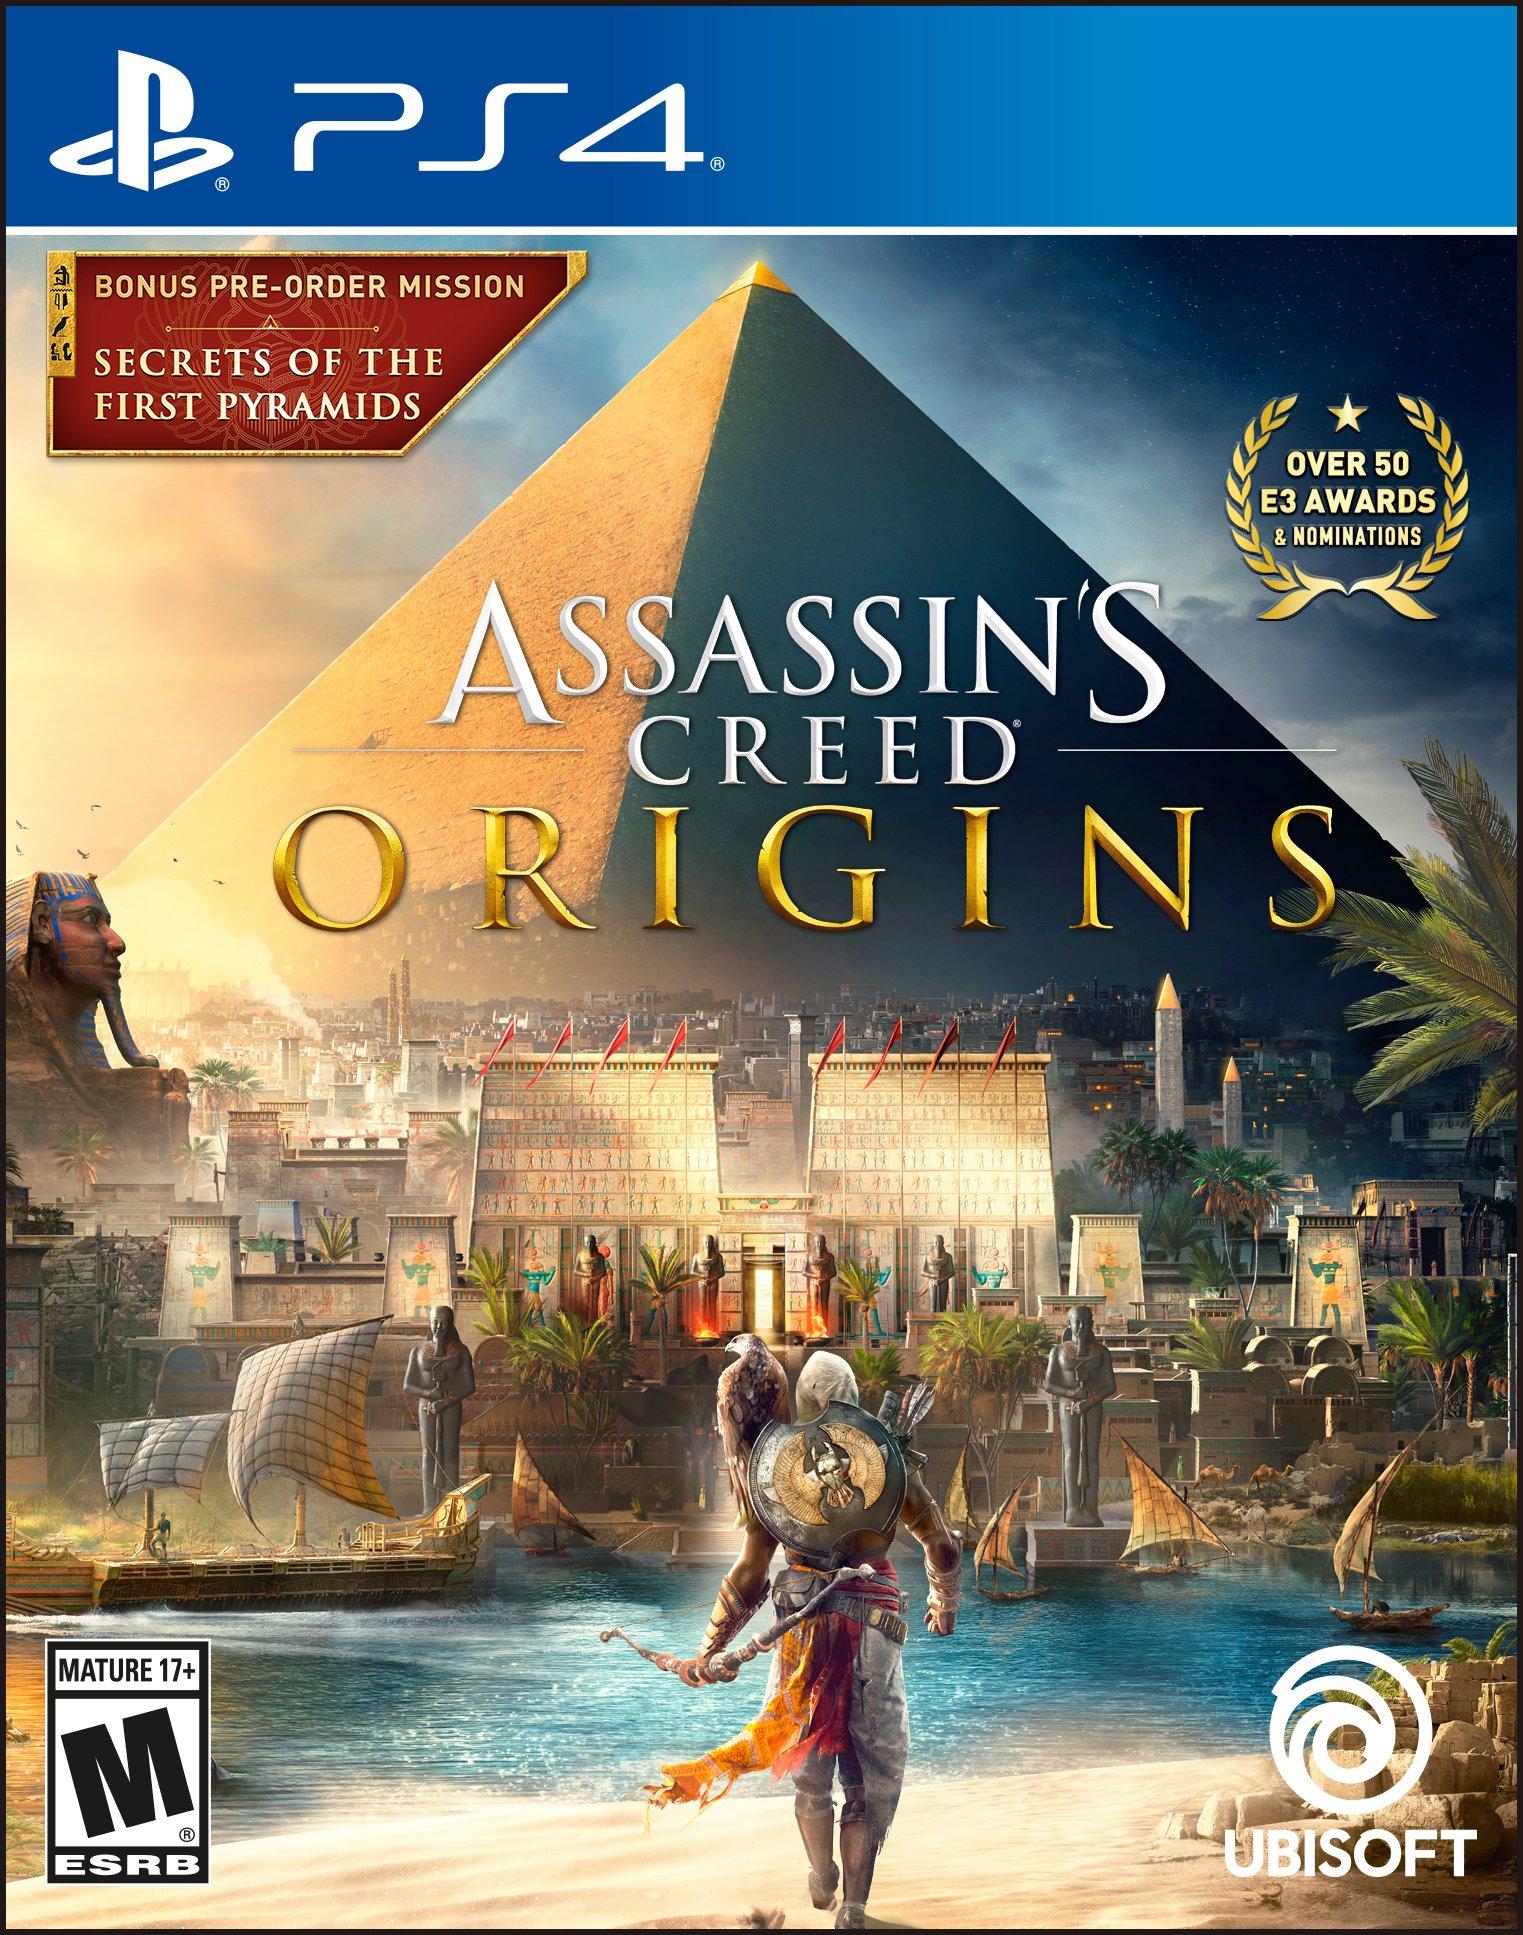 Sano Repelente atómico Assassin's Creed Origins - PlayStation 4